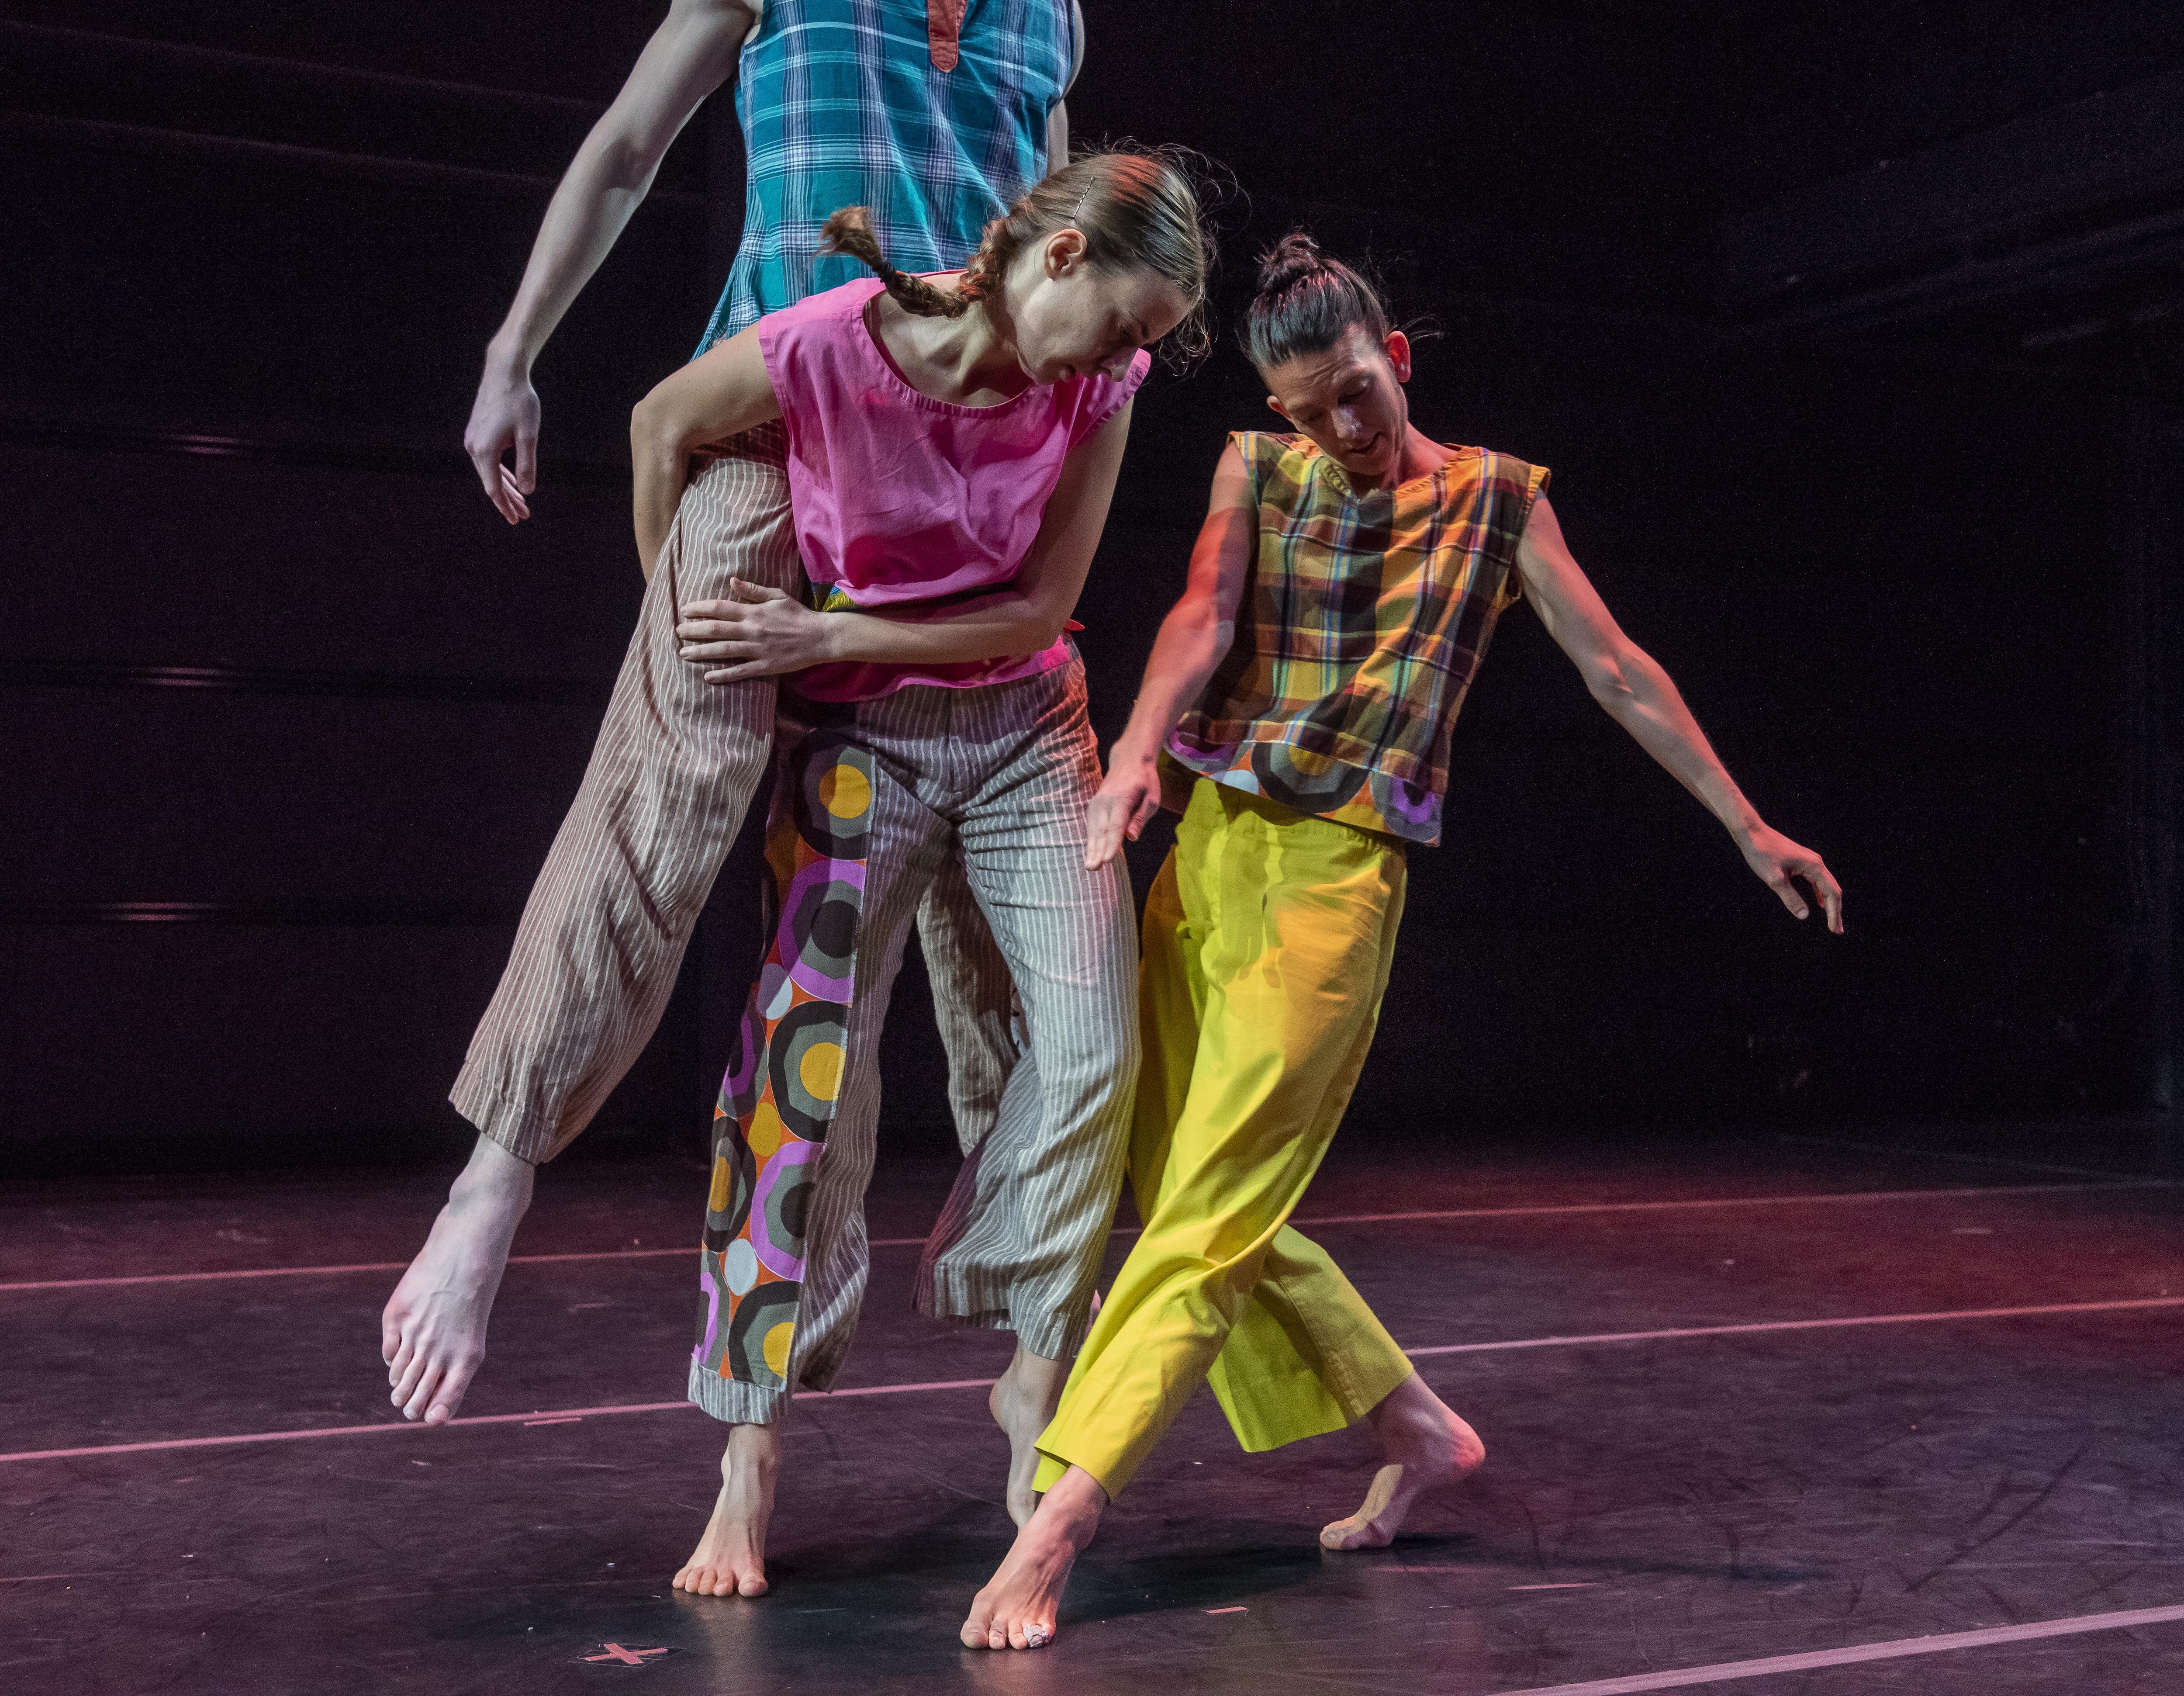 Three dancers dressed colourful